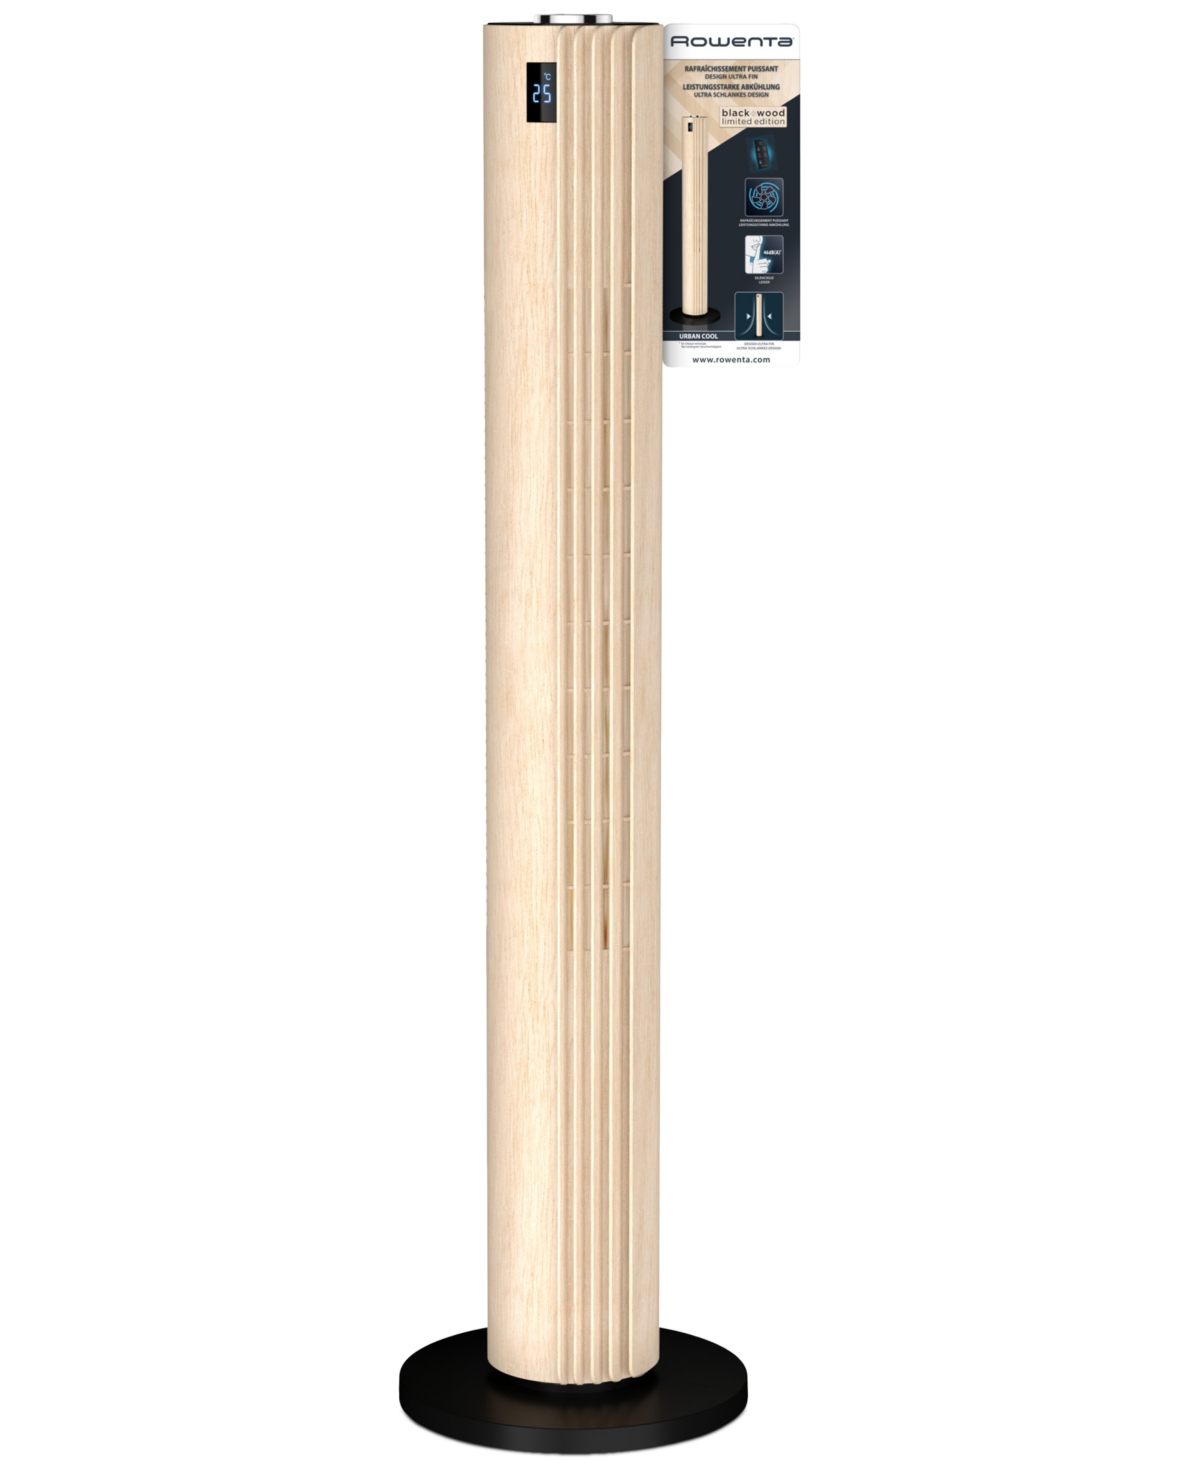 Urban Cool 3-Speed Slim Oscillating Tower Fan - Black And Wood Grain